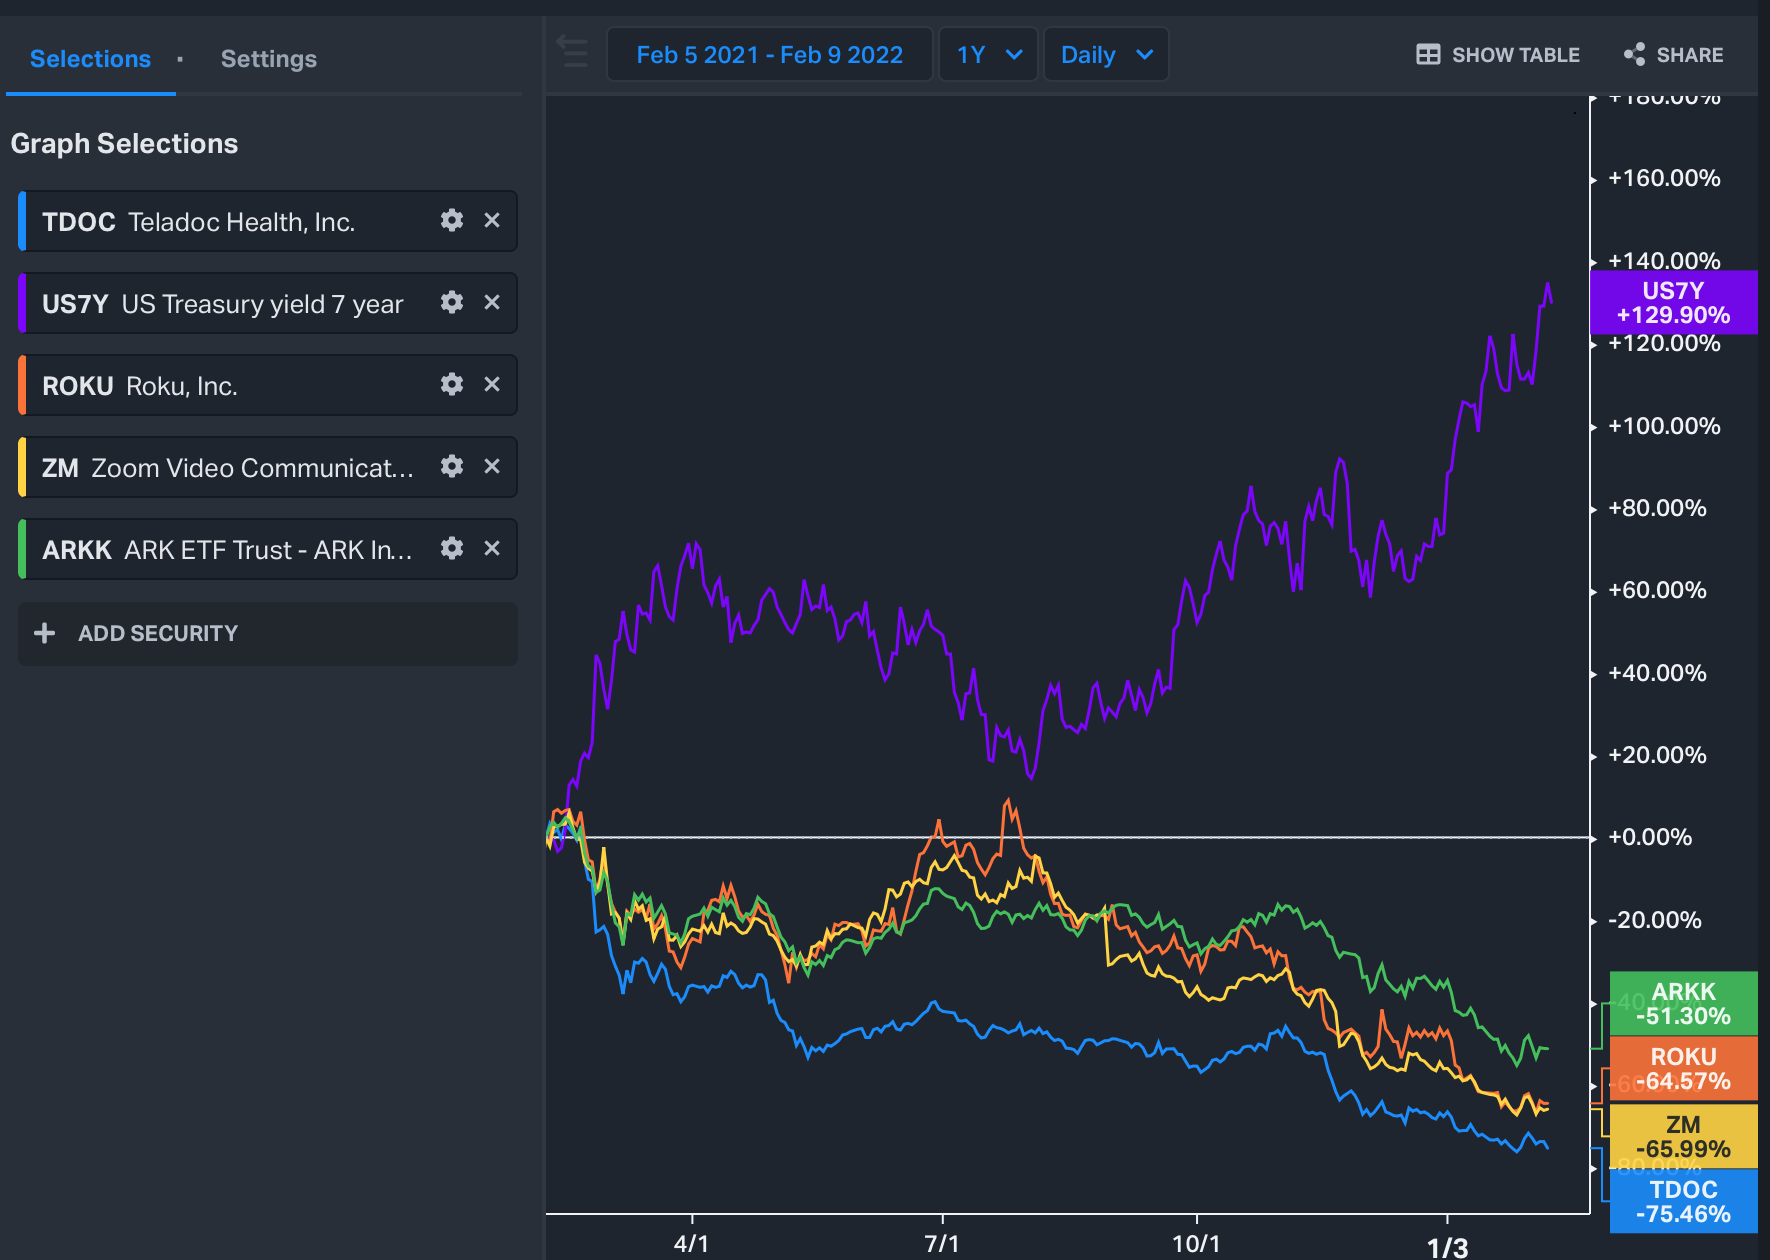 performance of main ARKK stock holdings vs Yield Curve